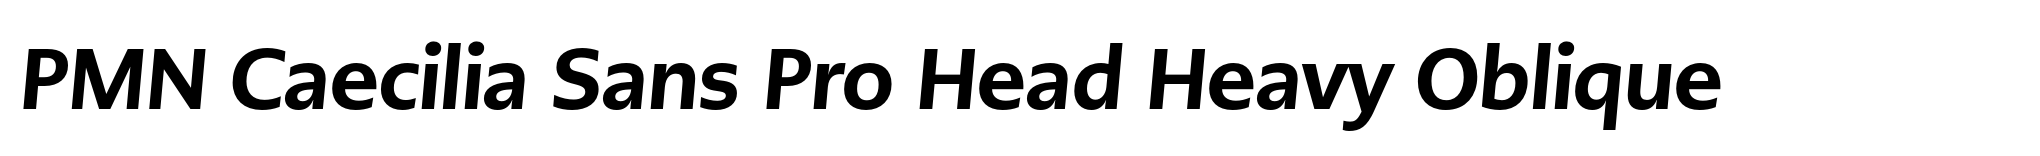 PMN Caecilia Sans Pro Head Heavy Oblique image